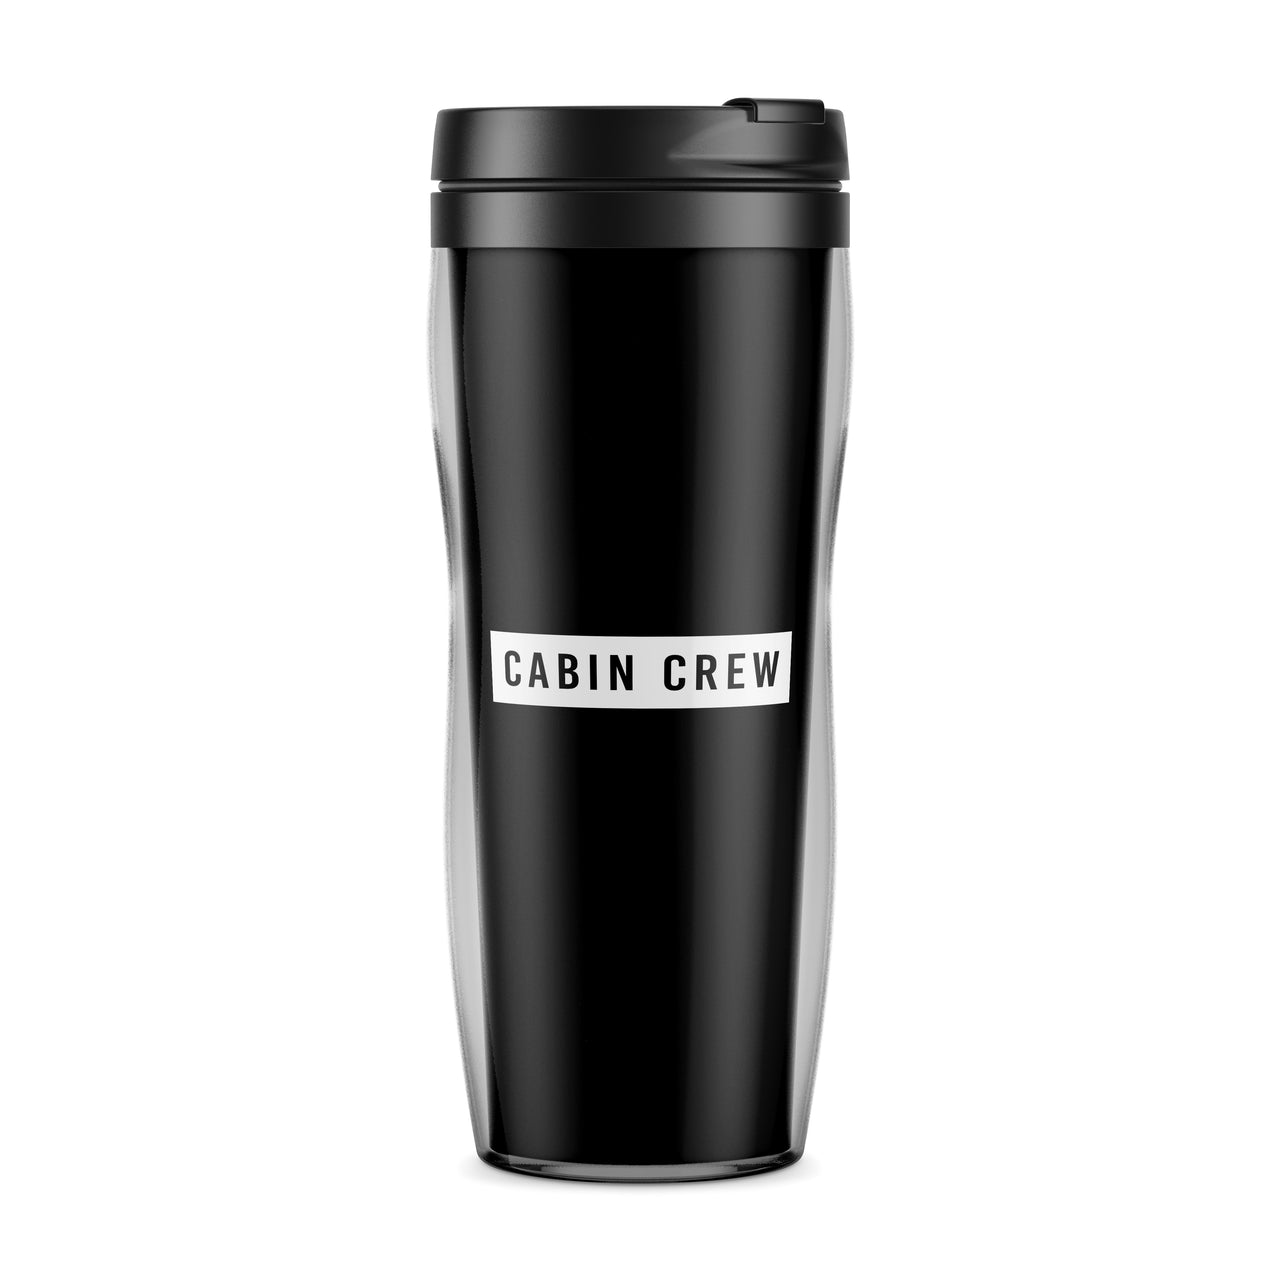 Cabin Crew Text Designed Travel Mugs